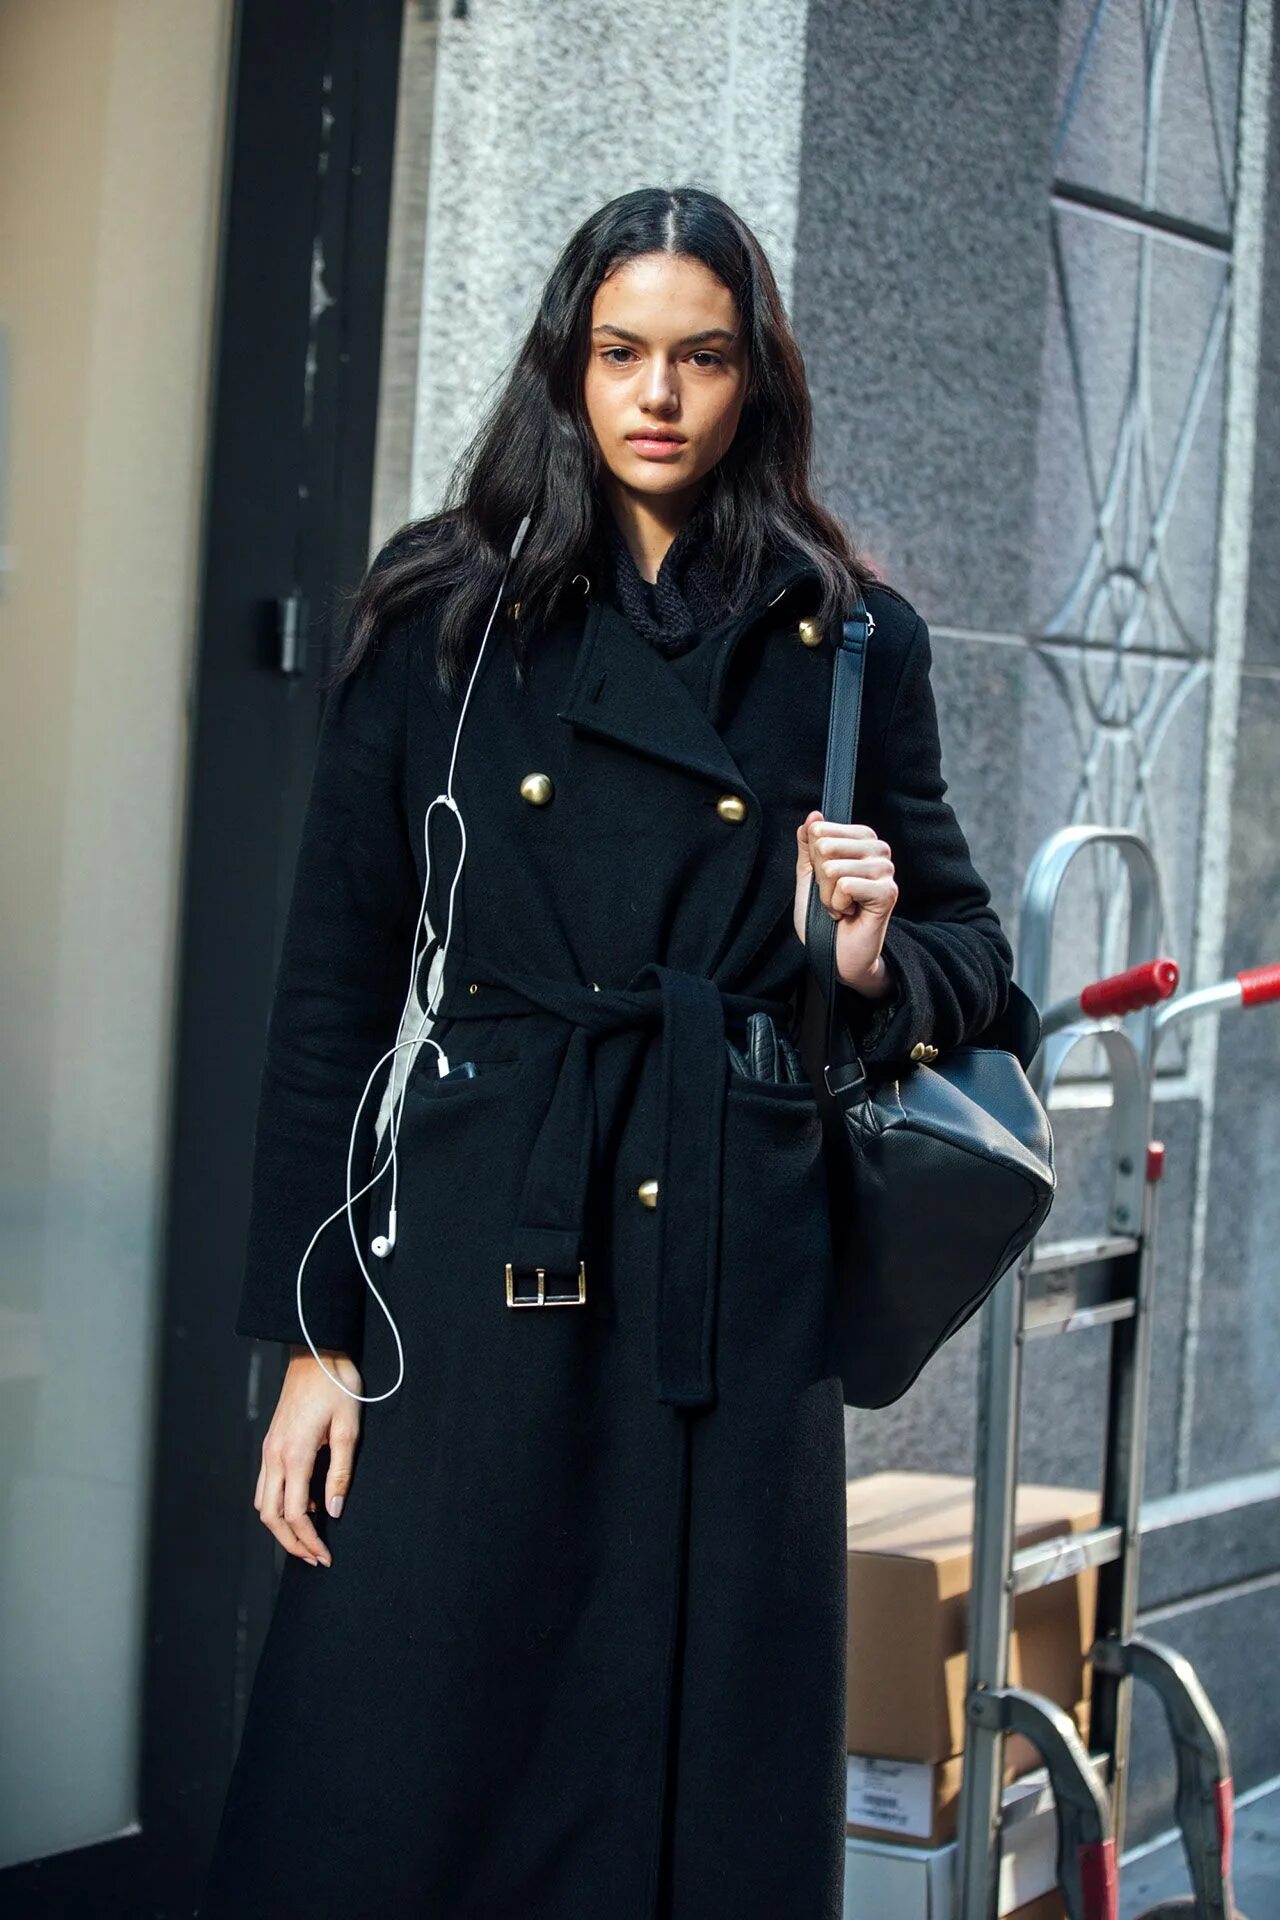 F w 18. Черное пальто Linda Rodin Street Style. Чёрное пальто женское. Длинное черное пальто. Стиль с черным пальто.